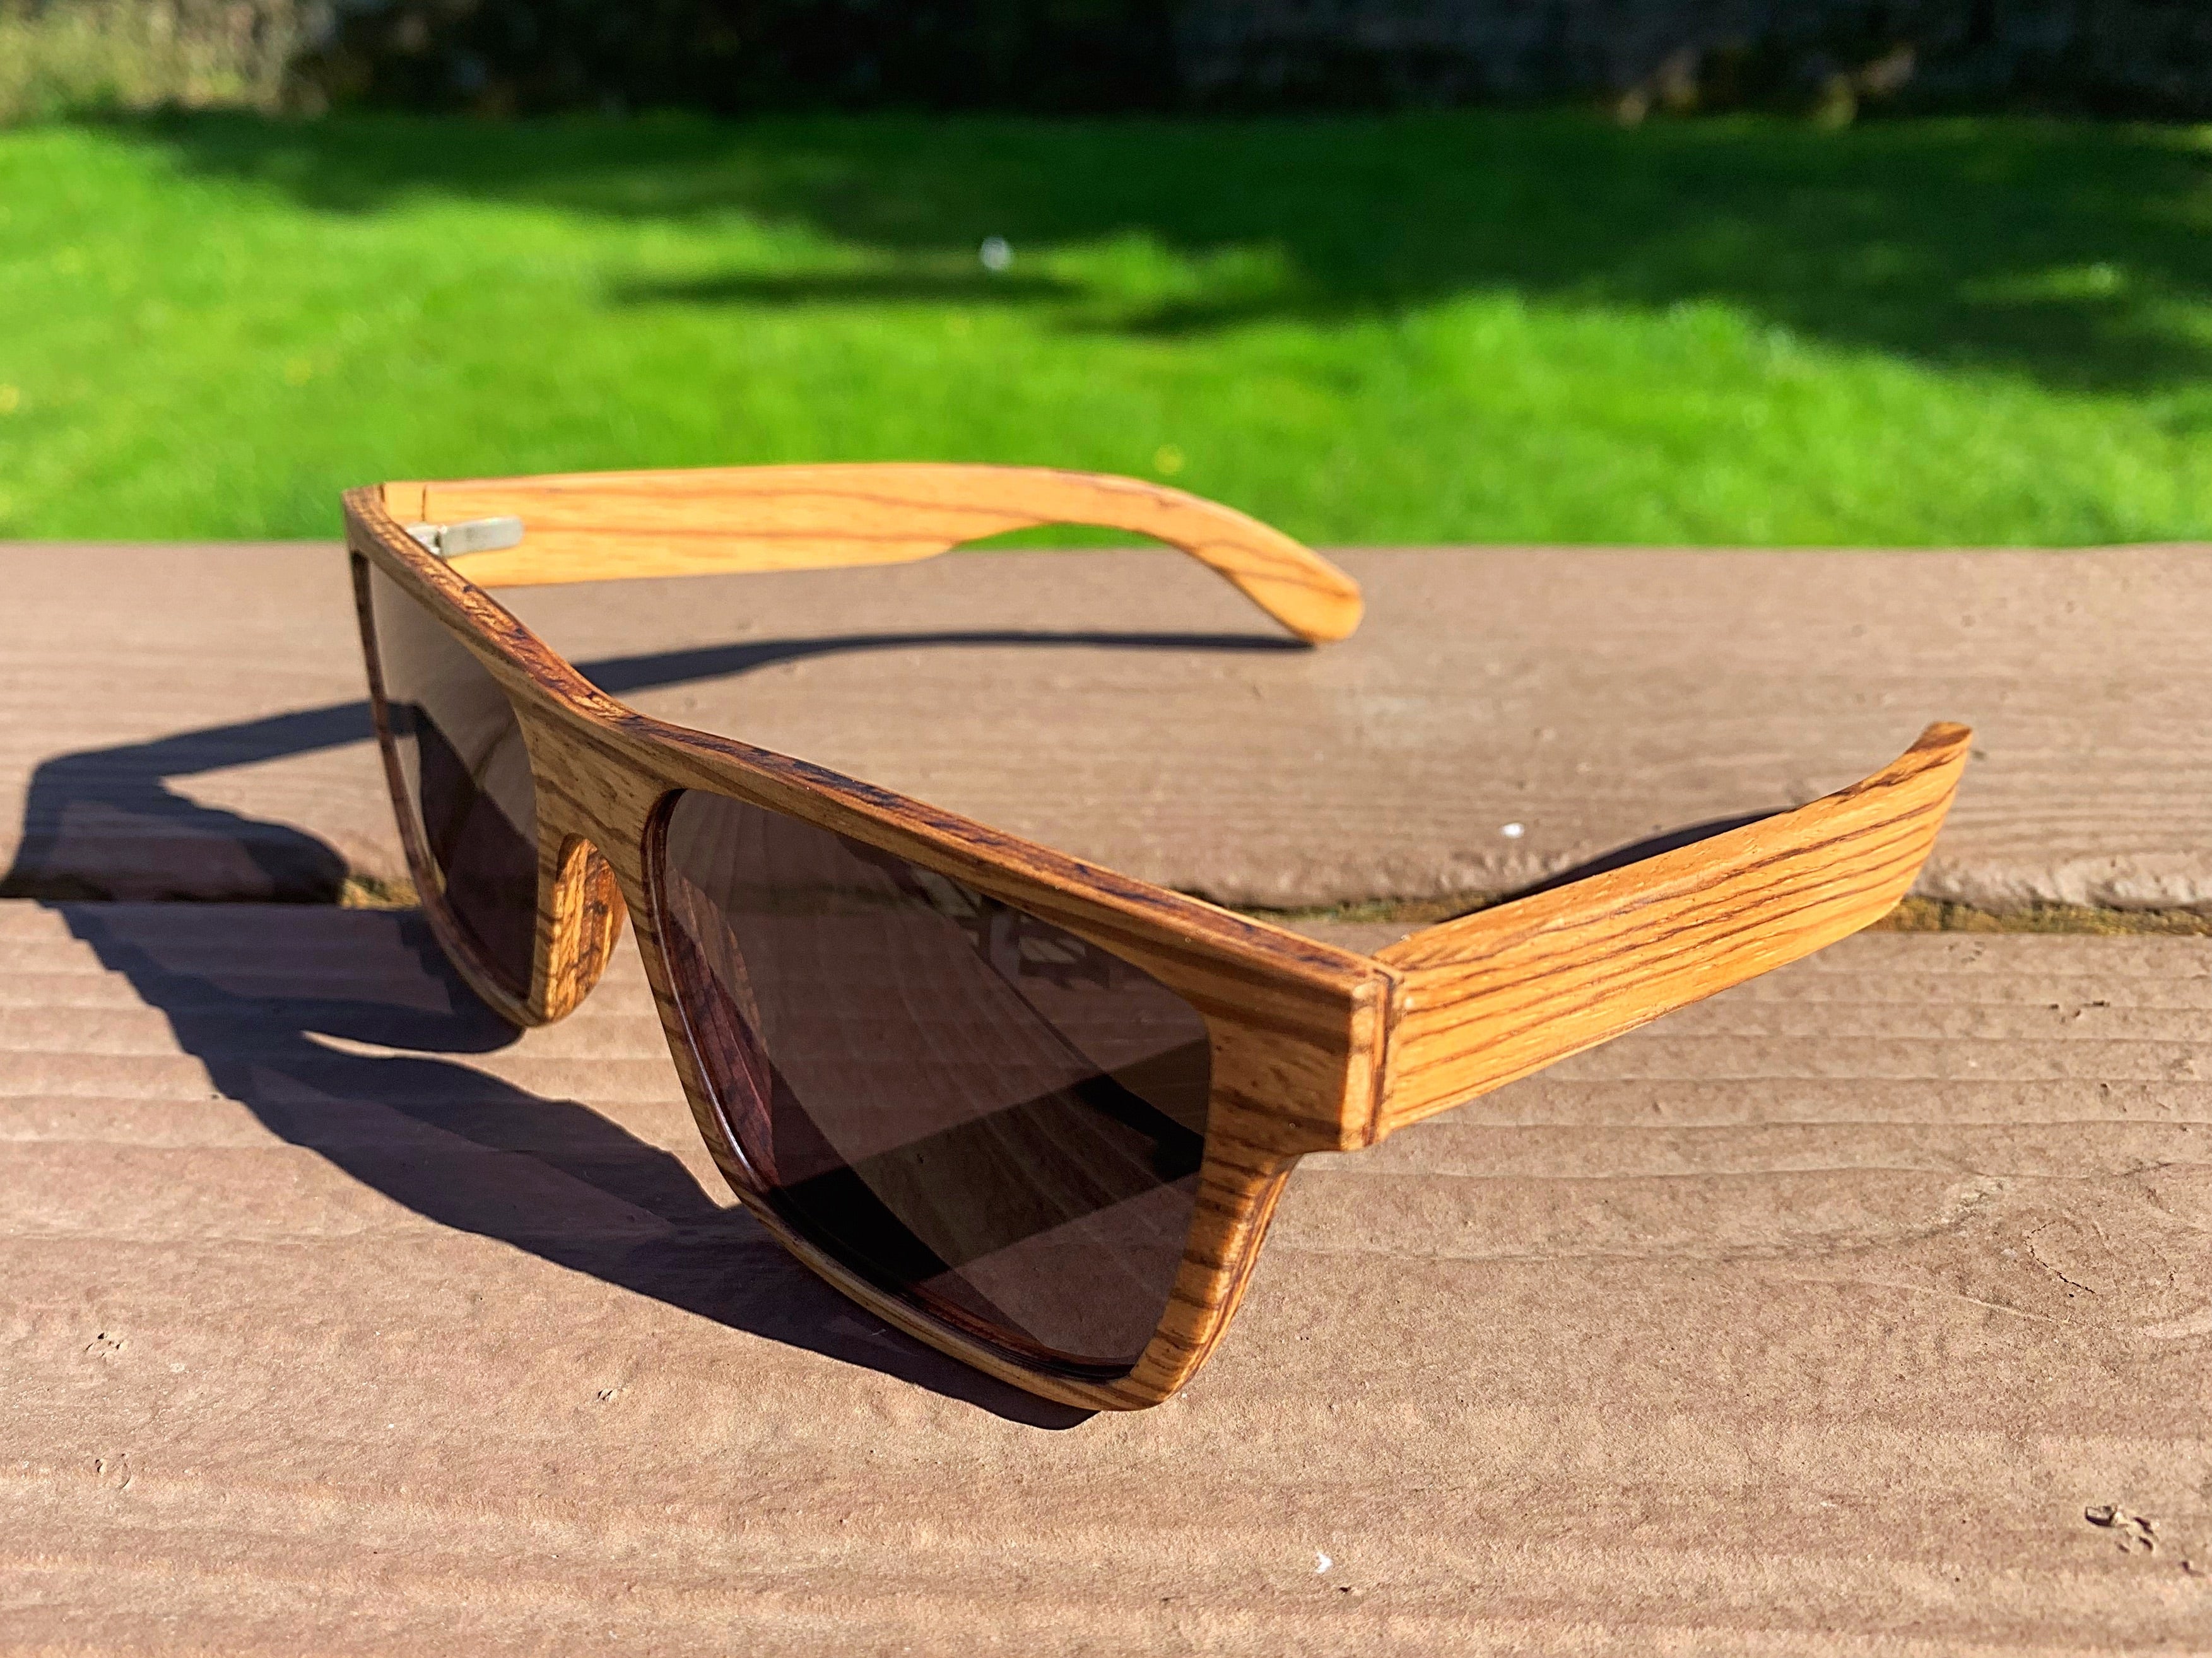 Zebra Wood Sunglasses